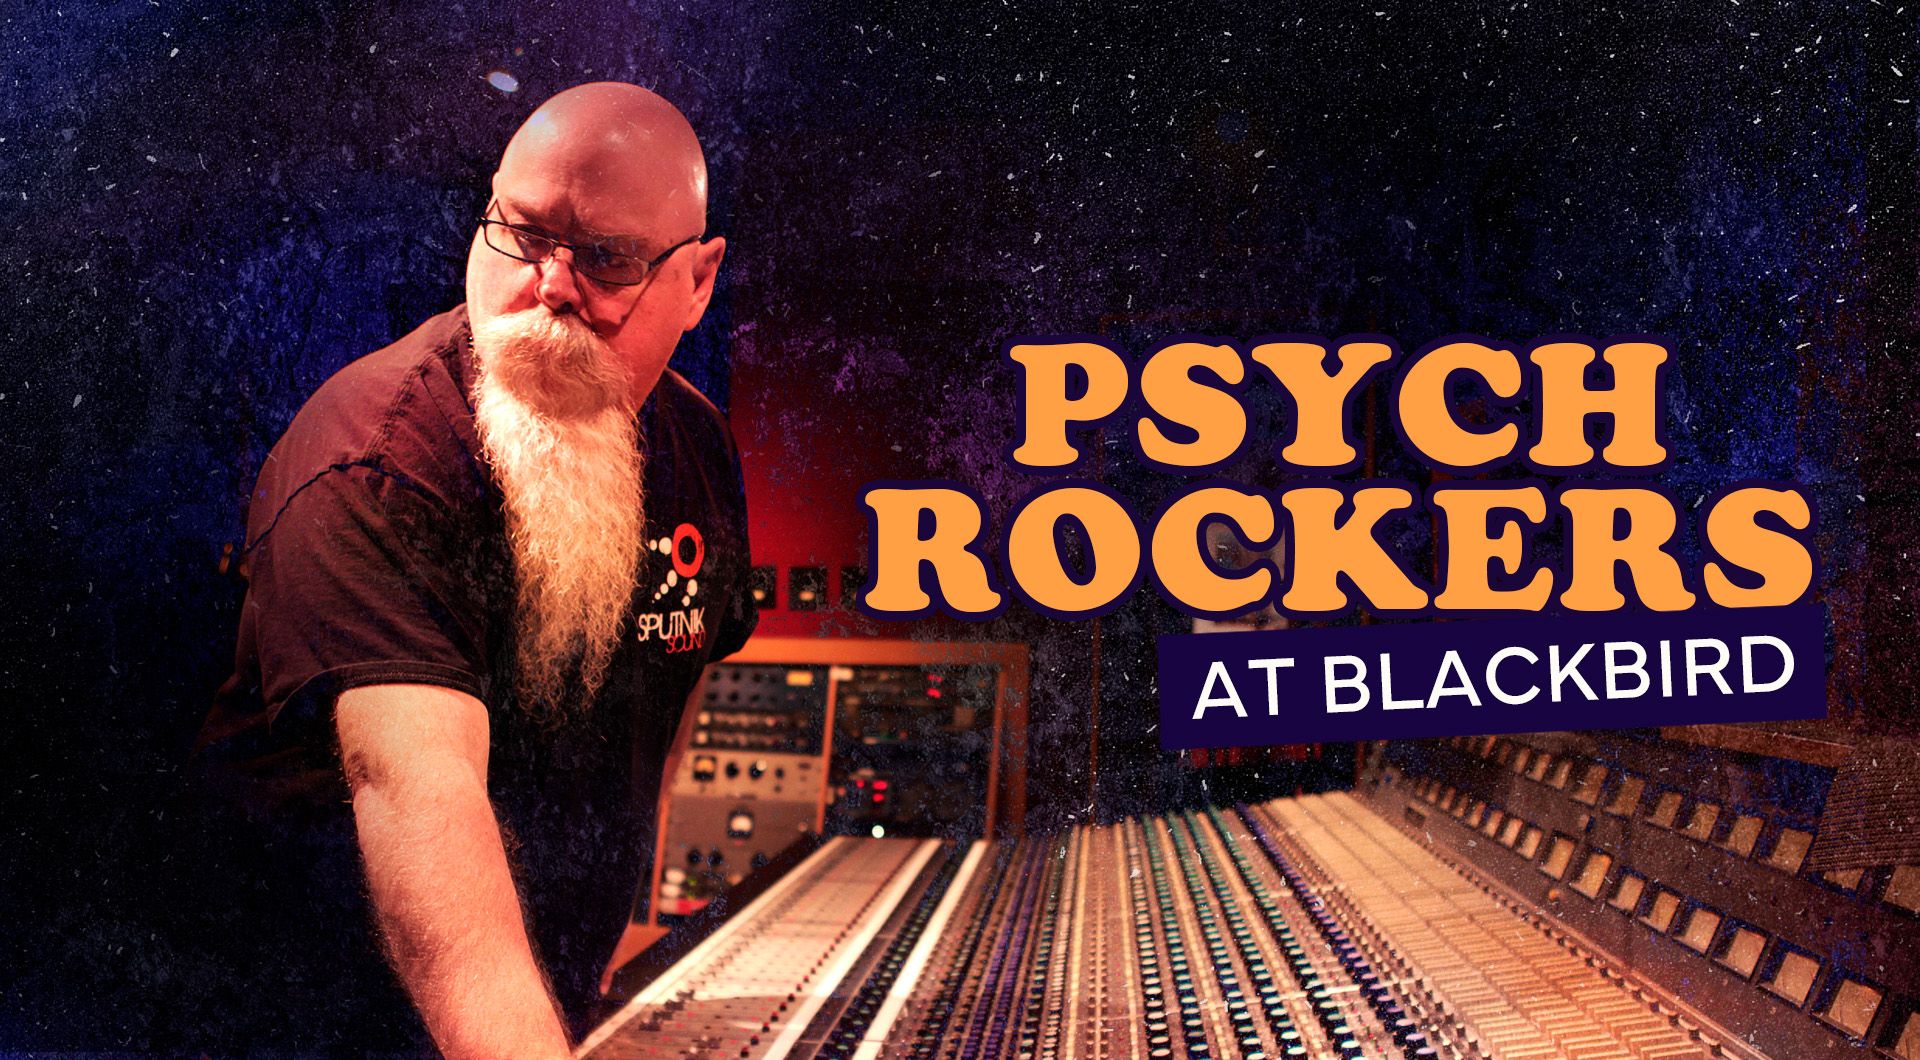 Psych rockers at Blackbird